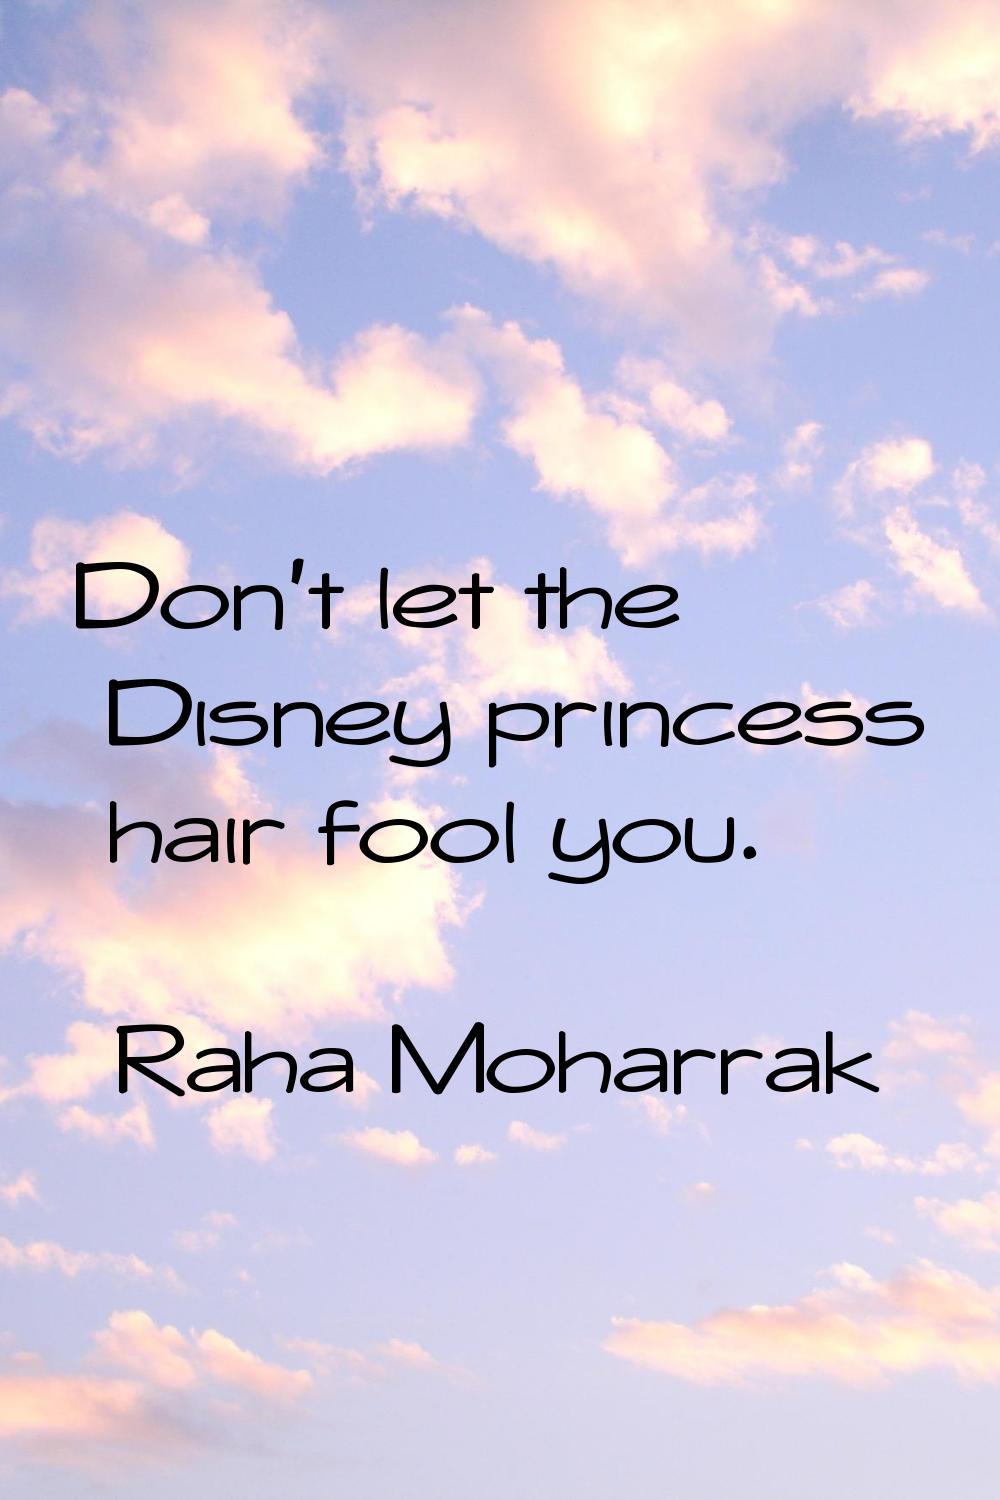 Don't let the Disney princess hair fool you.